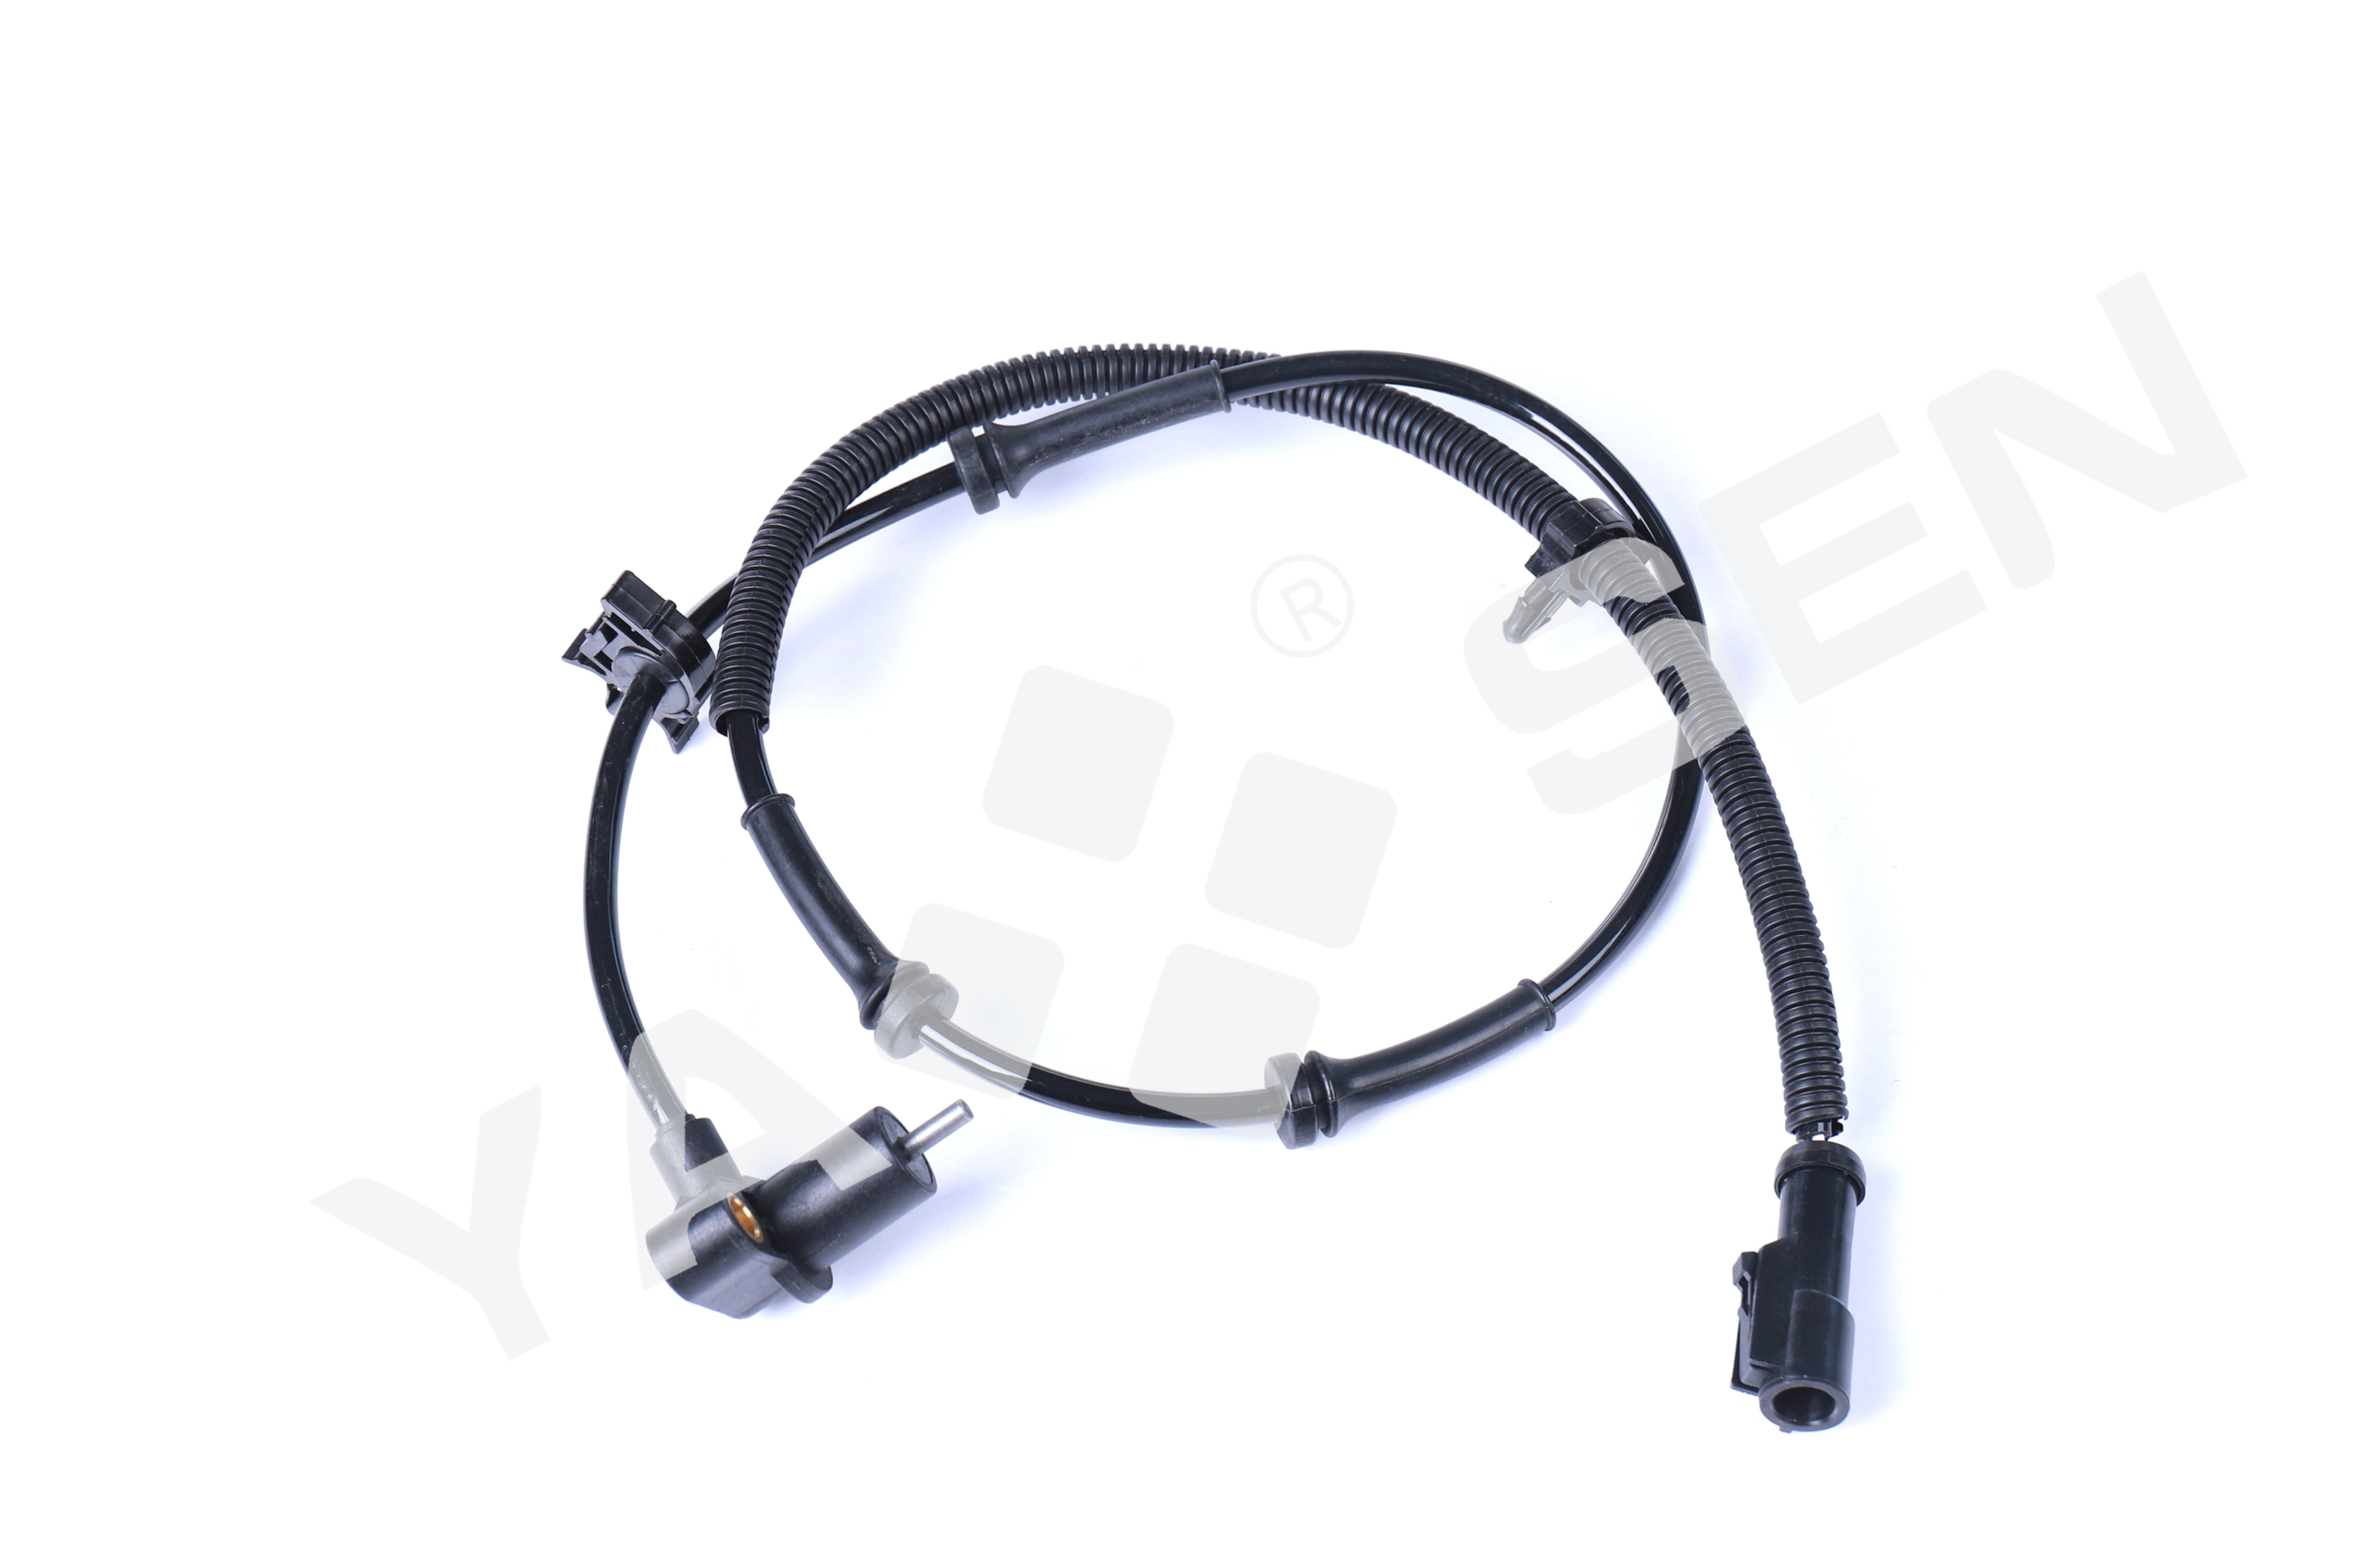 ABS Wheel Speed Sensor for FORD/DODGE, SU7551 ALS184 ABS295 184635 1802-305242 72-5645 5S6018 SU7551 F7ZZ-2C205-AB BRAB-65 192362